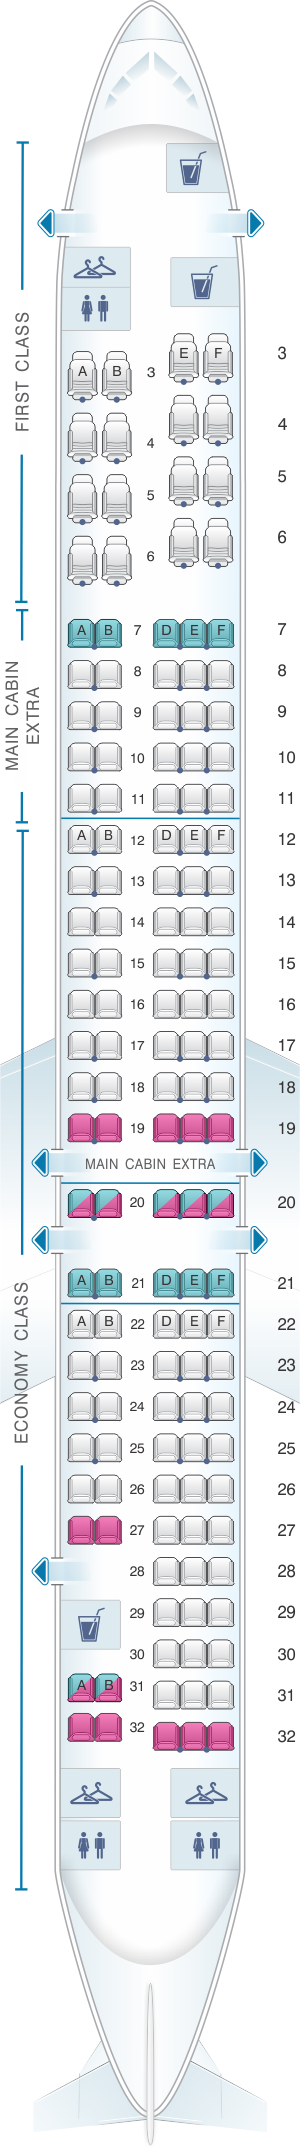 M80 Airplane Seating Chart